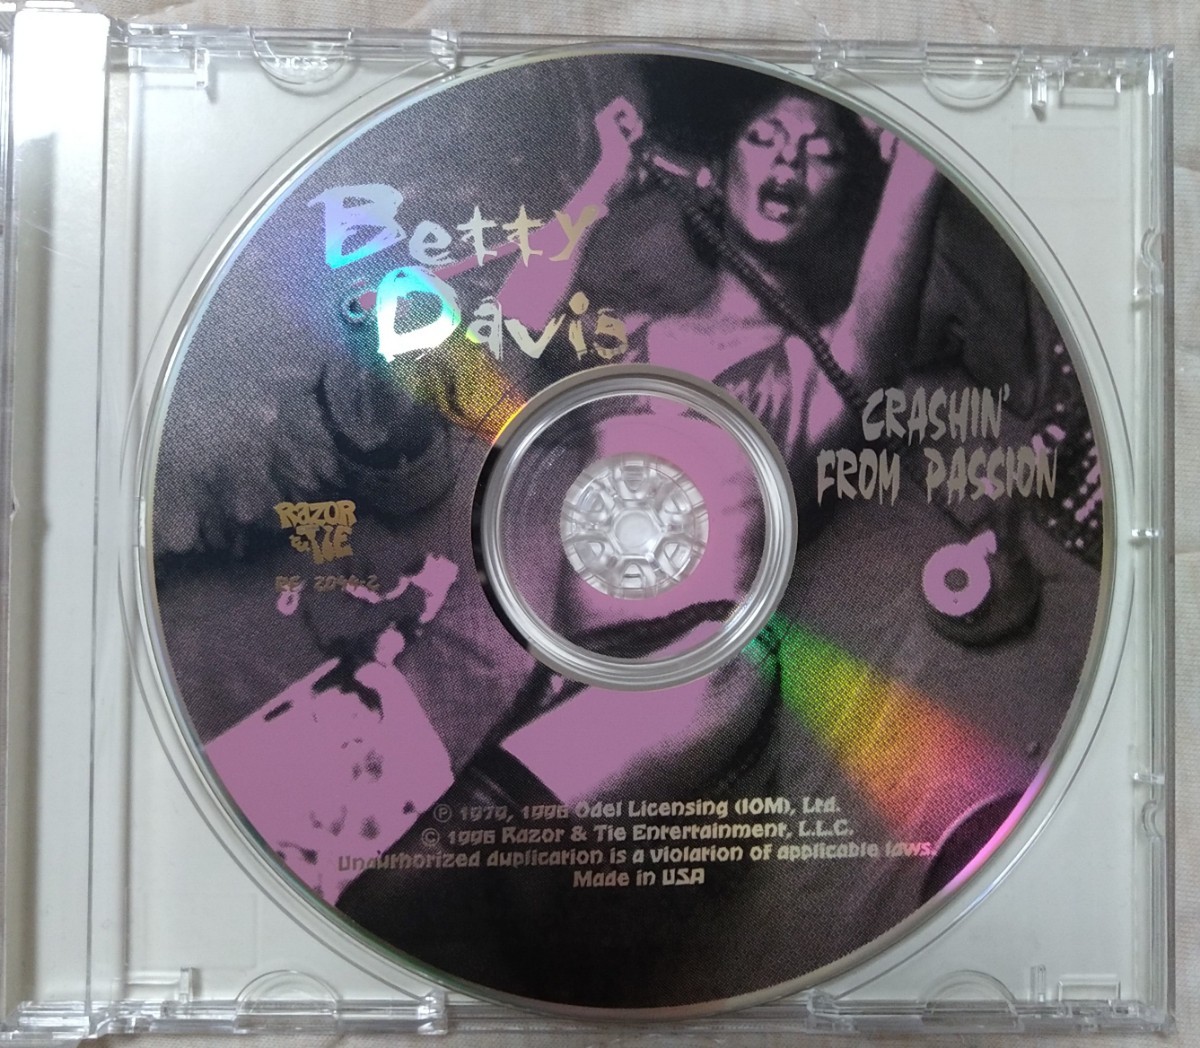 BETTY DAVIS CRASHIN' FROM PASSION 廃盤輸入盤中古CD ベティ・デイヴィス クラッシン・フロム・パッション RE2044-2_画像3